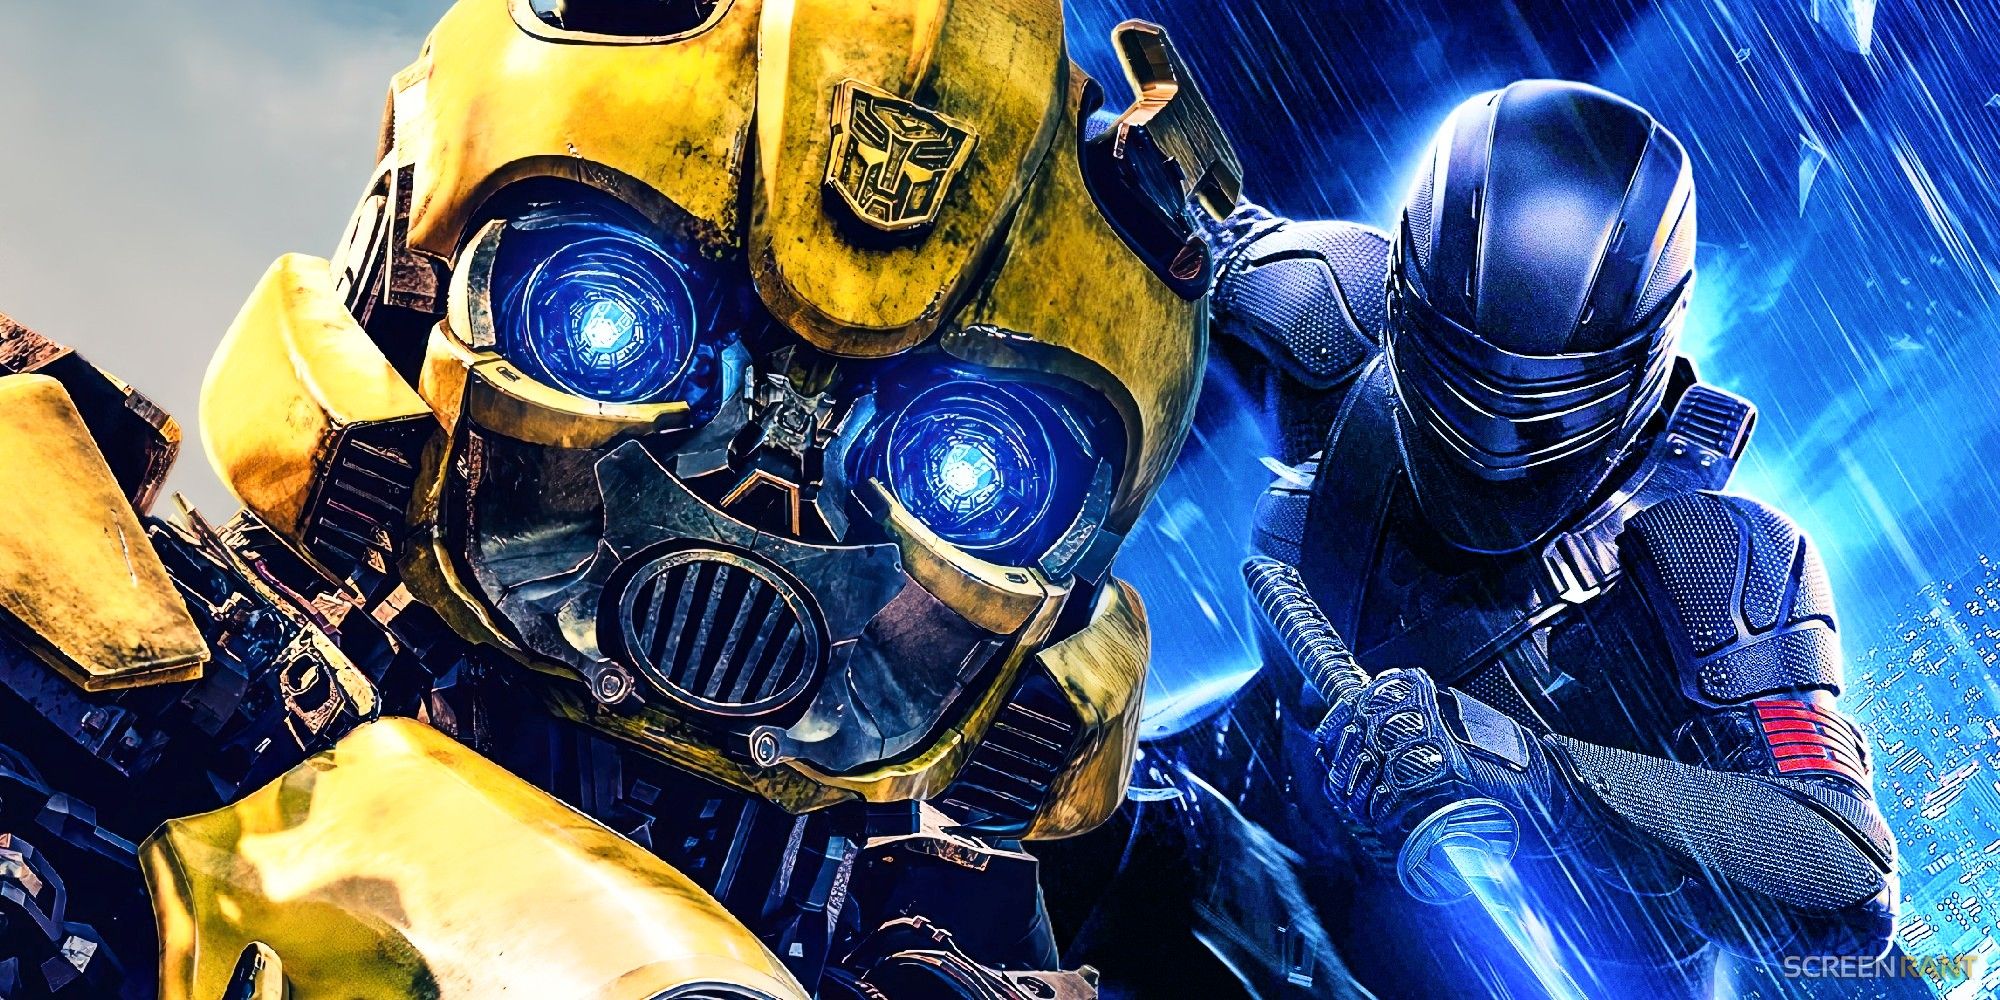 Bumblebee in Transformers: Rise of the Beasts in Snake Eyes in Snake Eyes